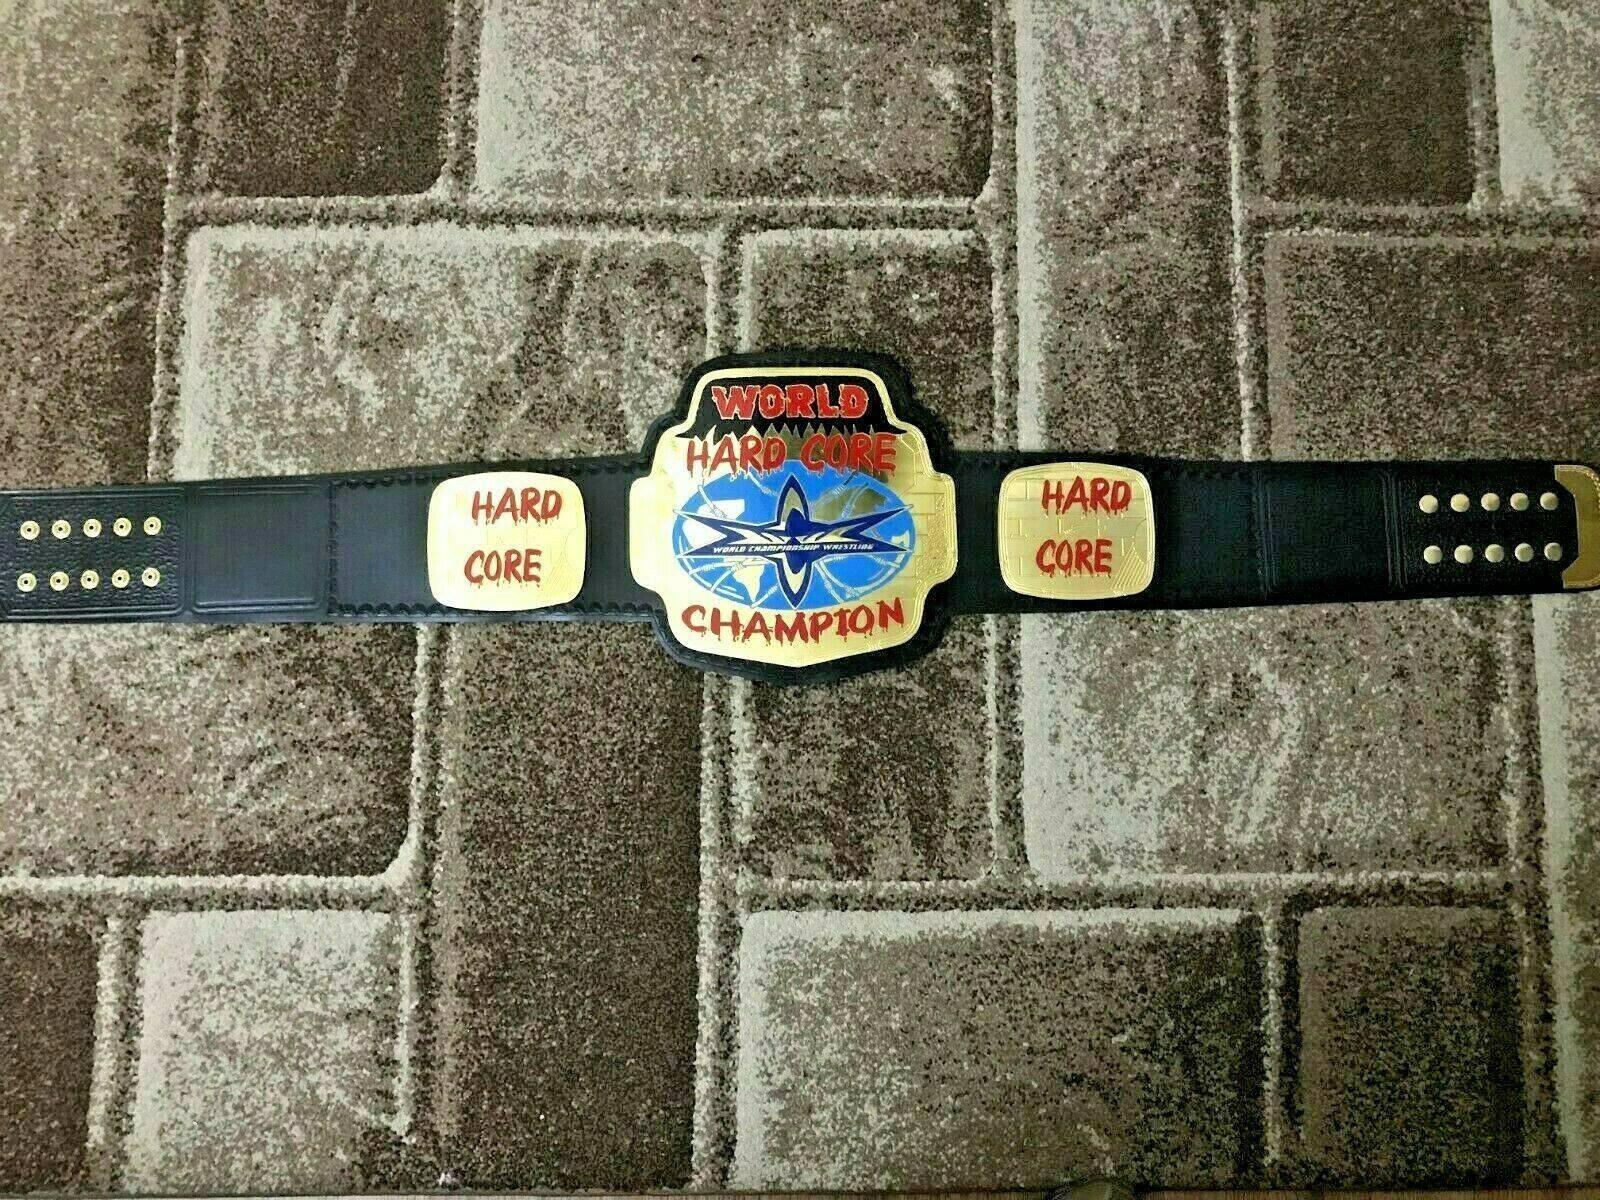 WCW WORLD HARDCORE Brass Championship Belt - Zees Belts